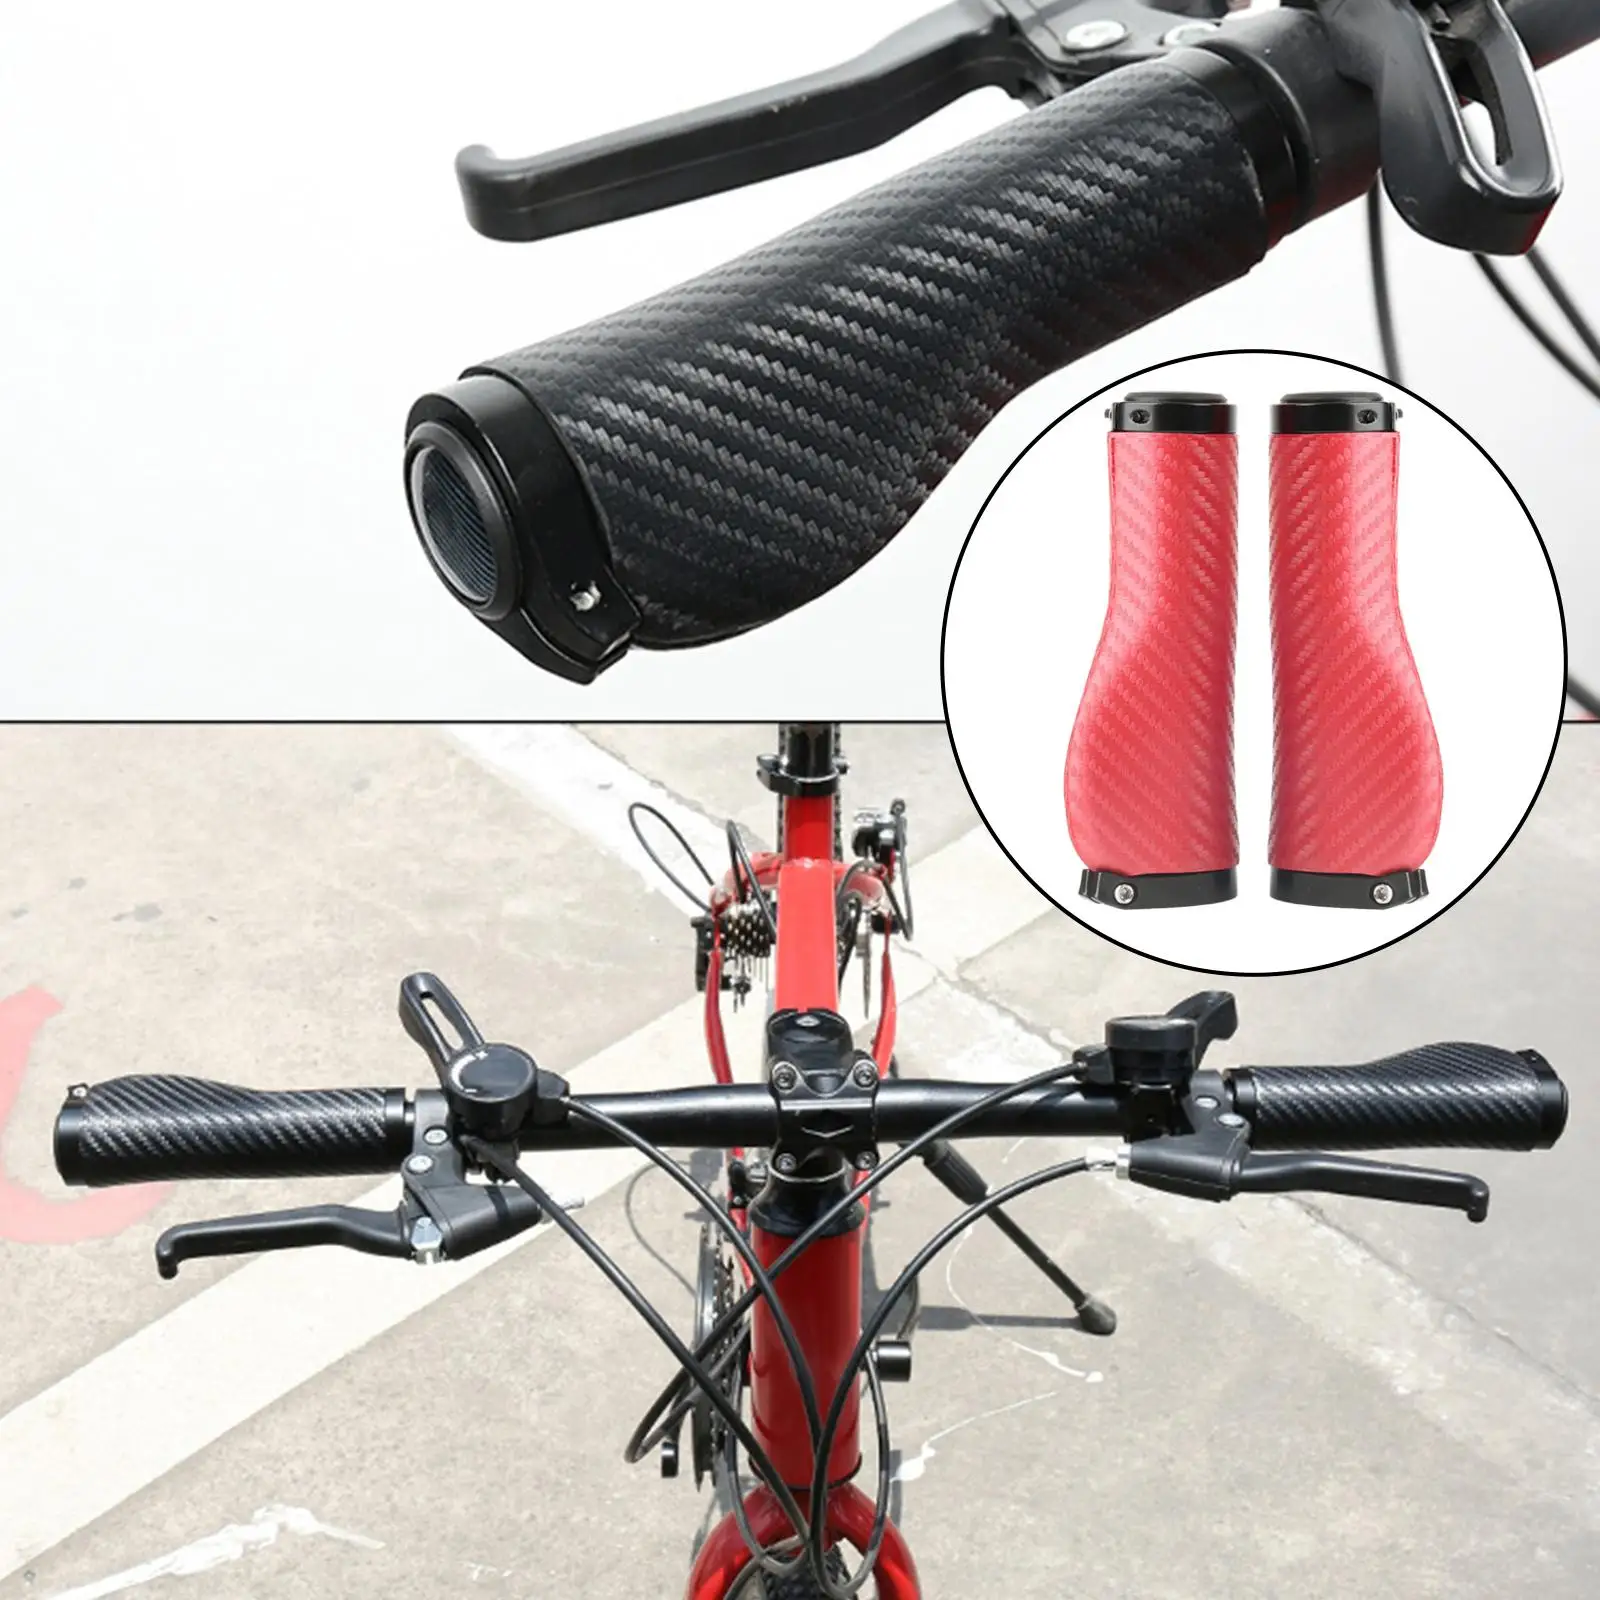 2x PU Mountain Bike Handlebar Grips Lockable Anti Skid Bar Grips